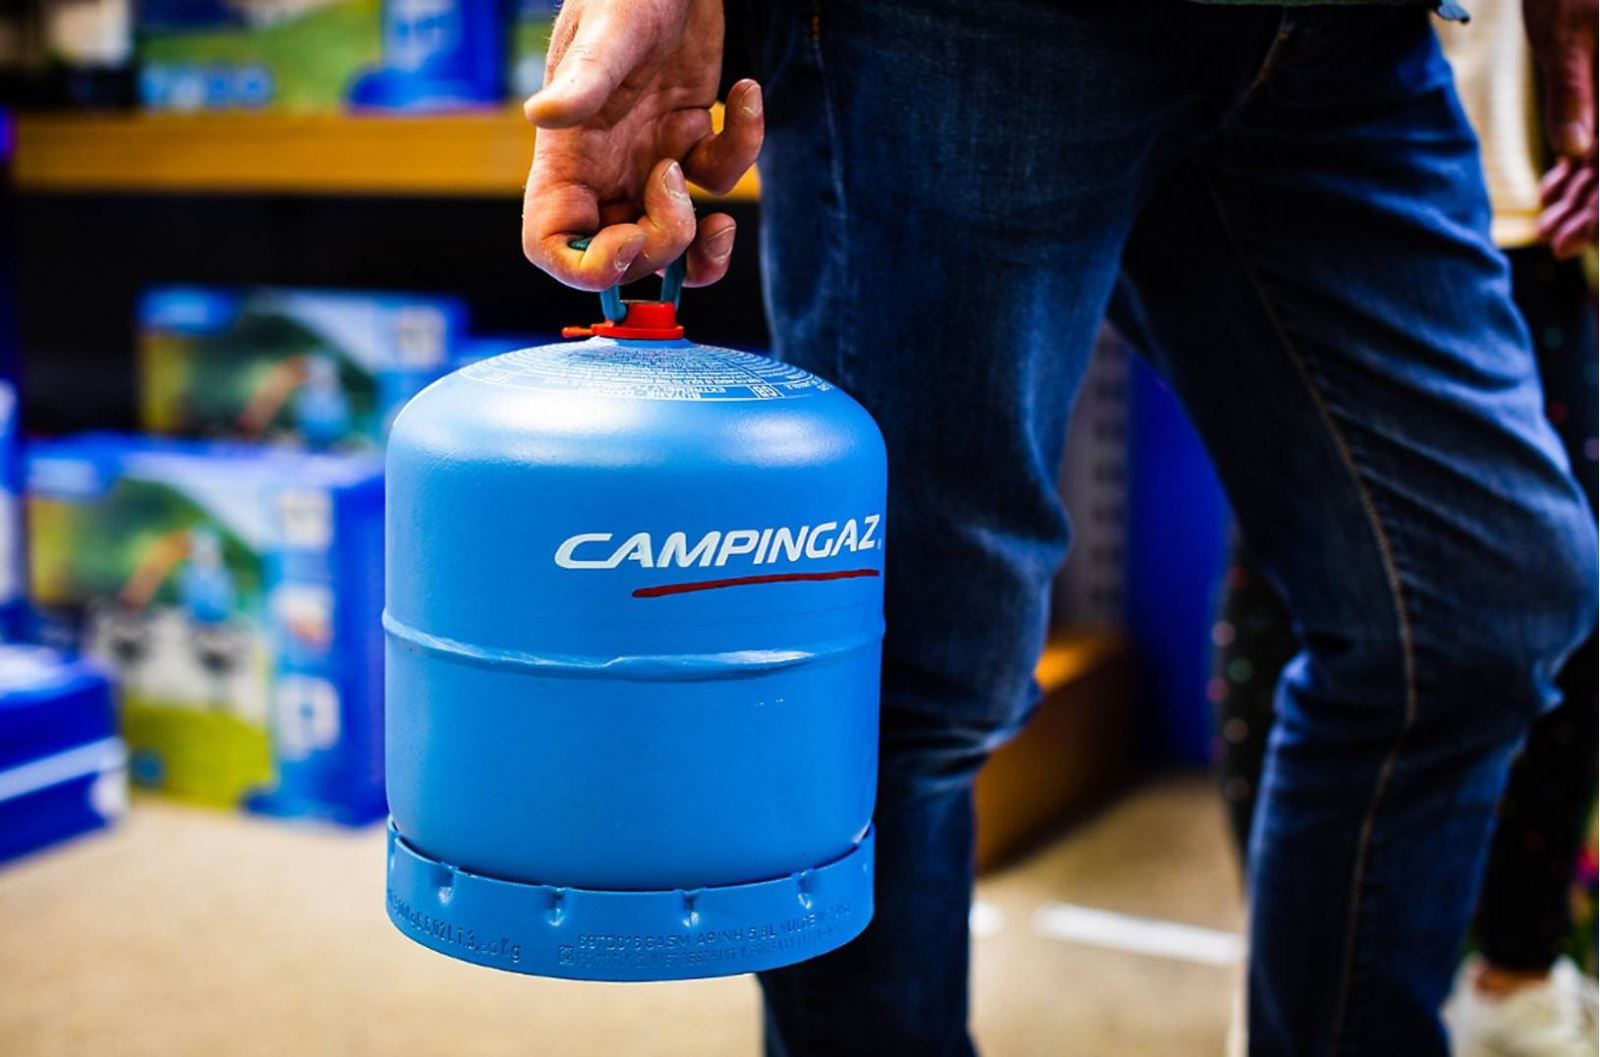 A campingaz gas cylinder